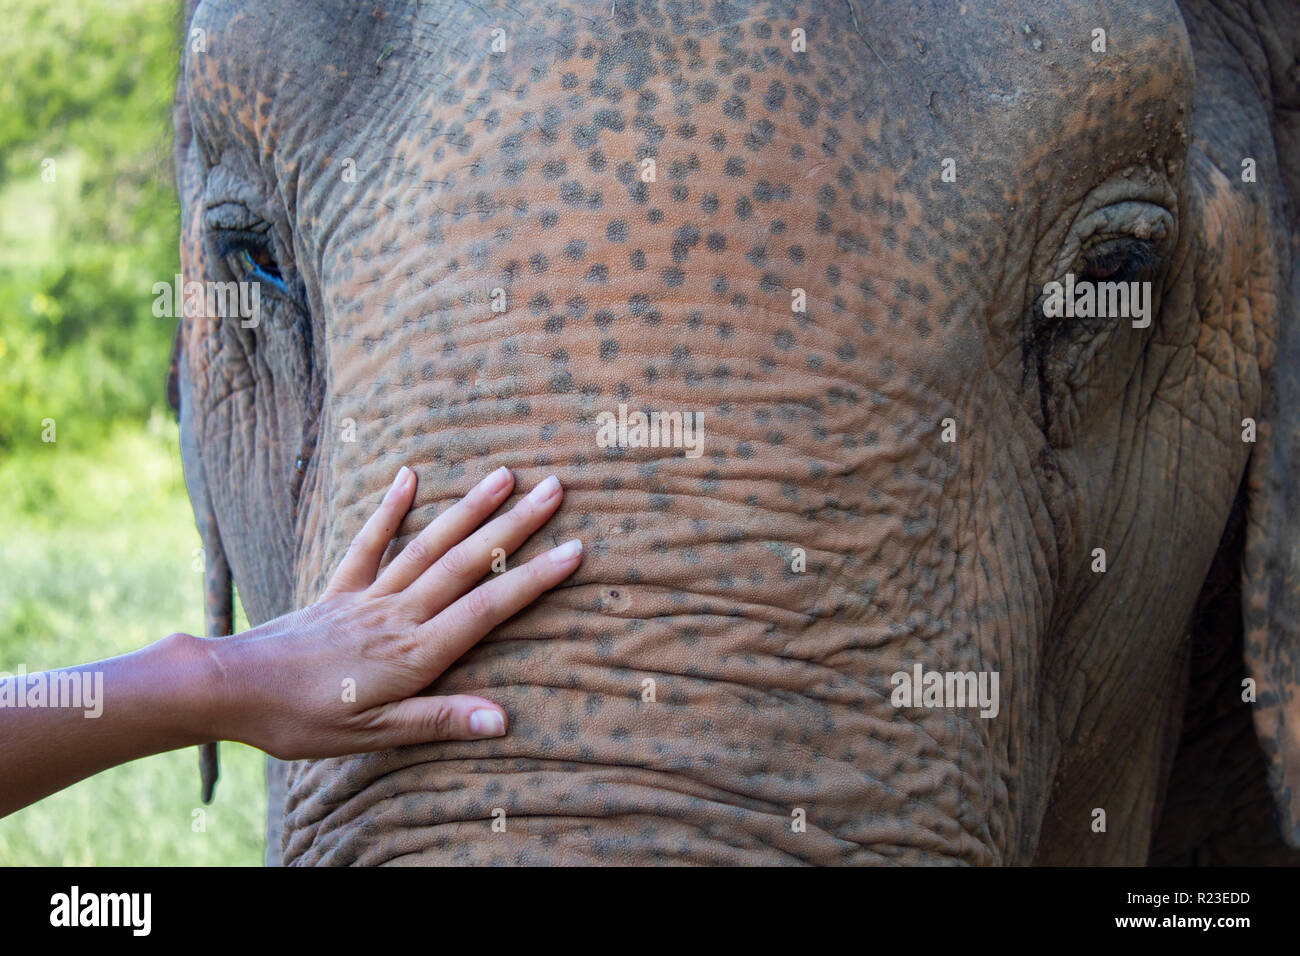 Female Hand touching Elephant’s Trunk Closeup Stock Photo